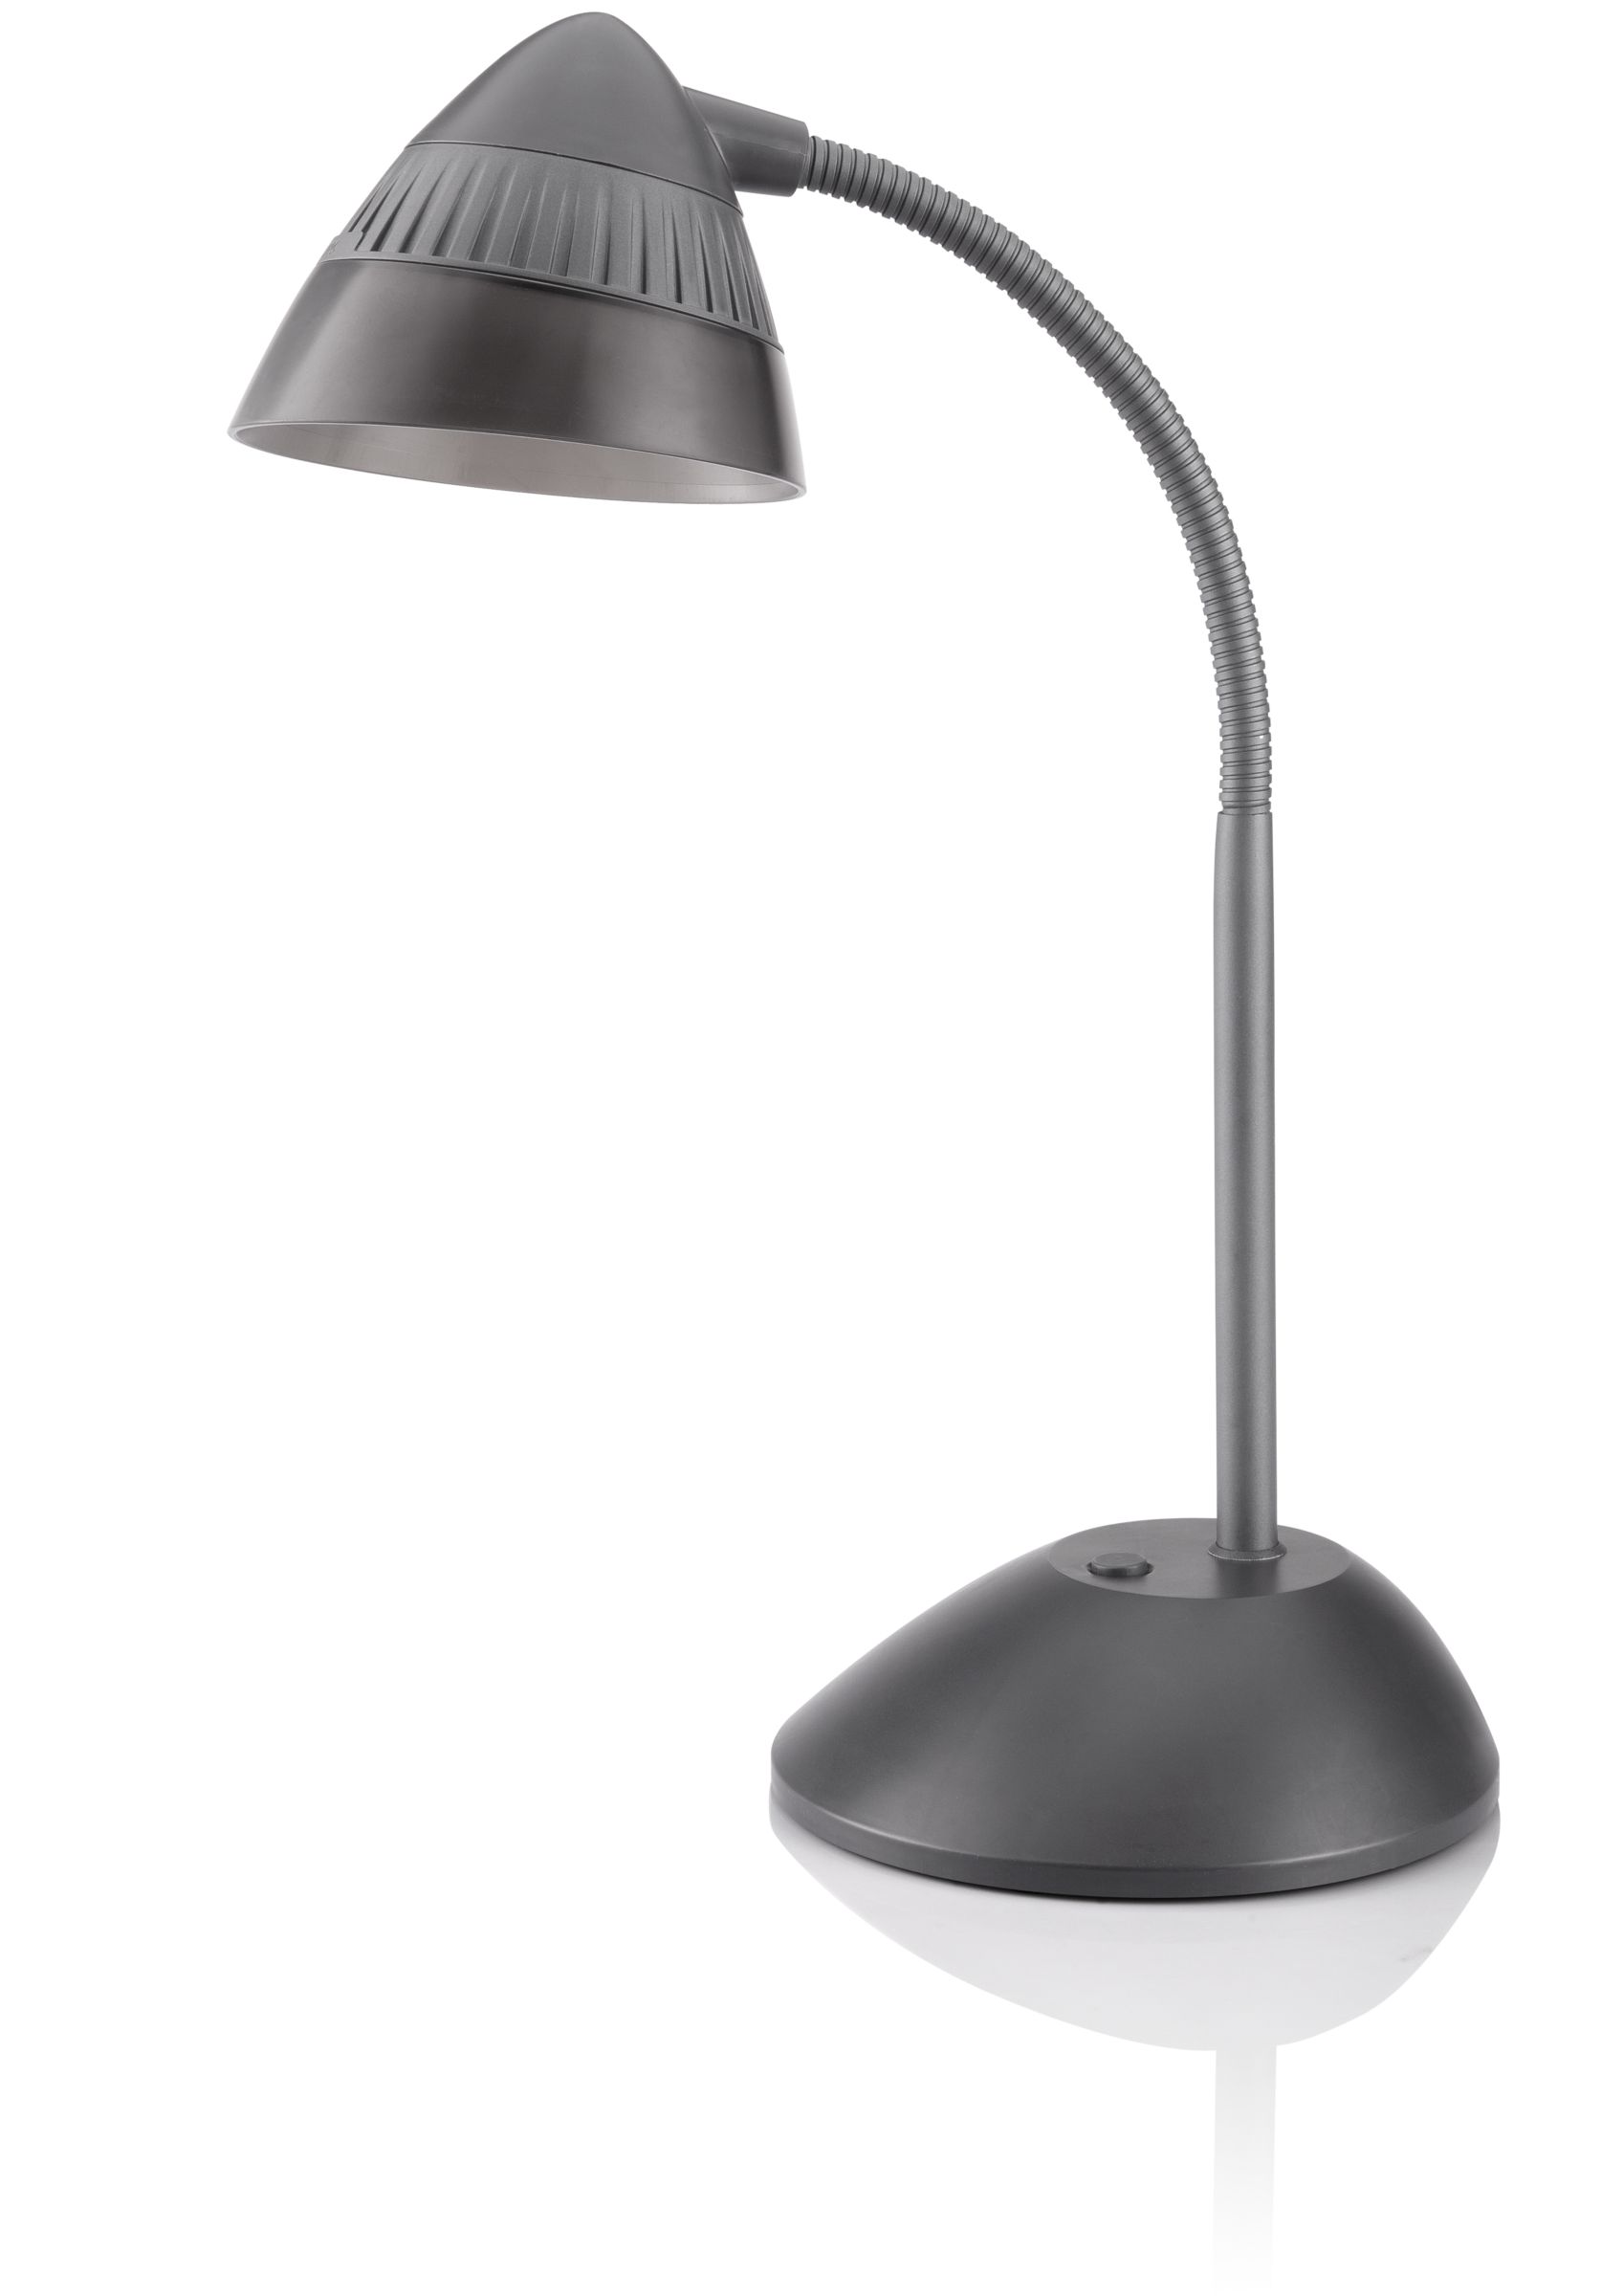 Buy LED Table Lamps \u0026 Study Lamp Online 